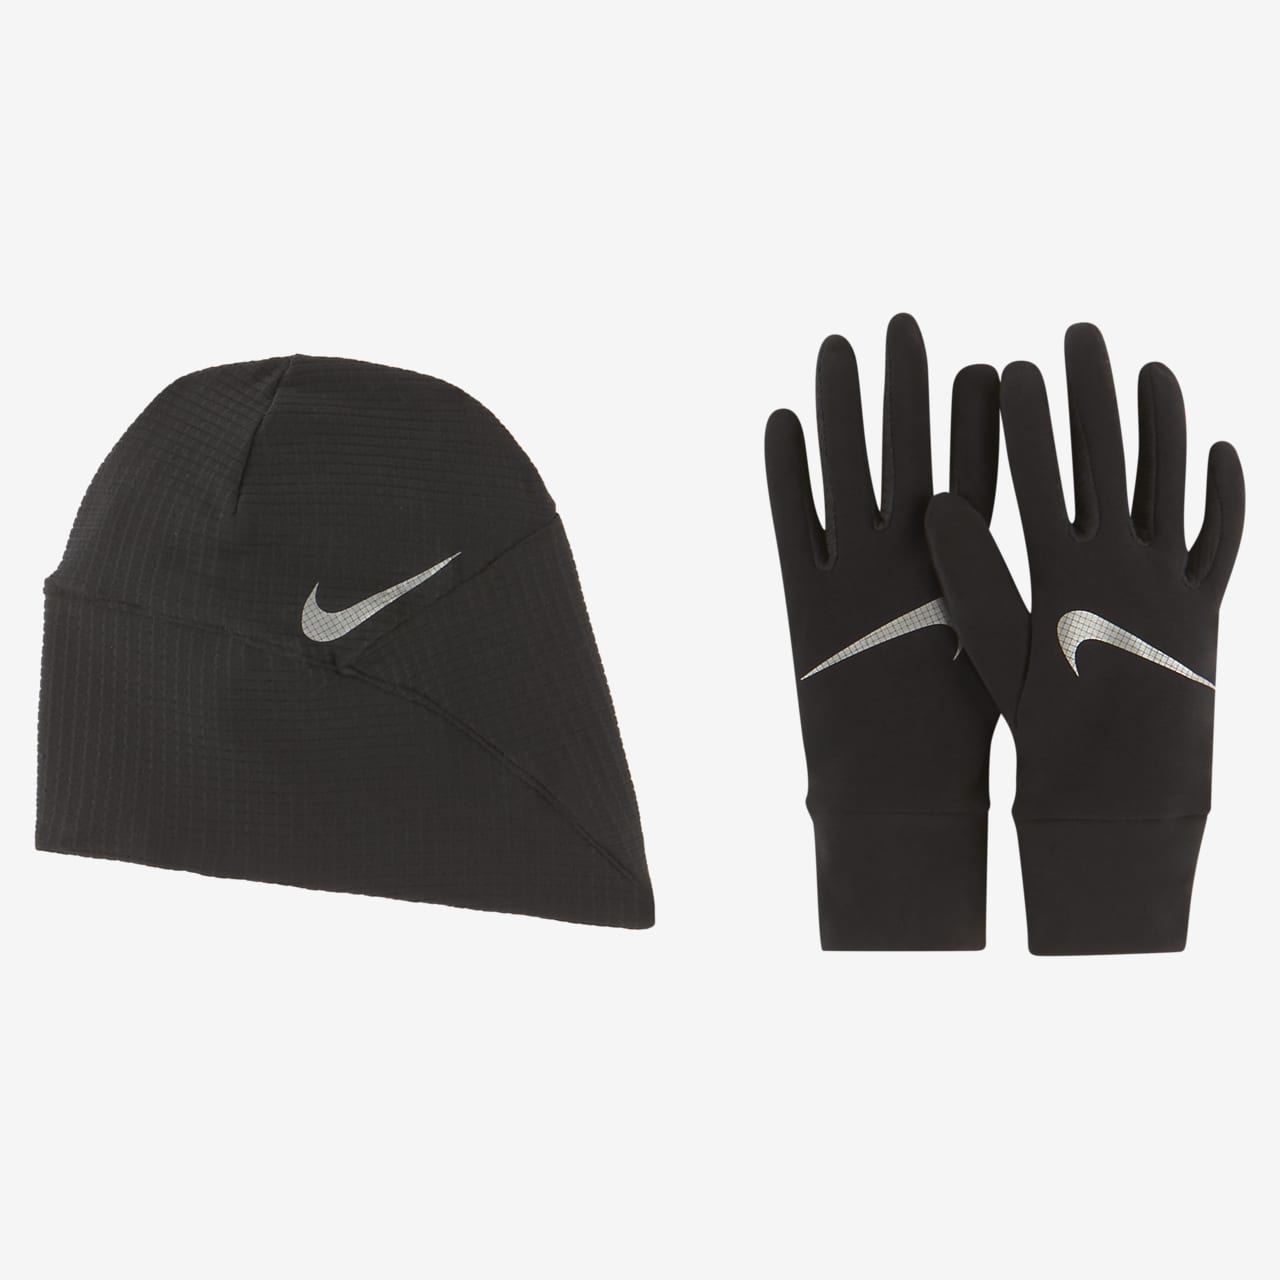  Nike Big Kids' Girls White/Gray Beanie and Gloves Set